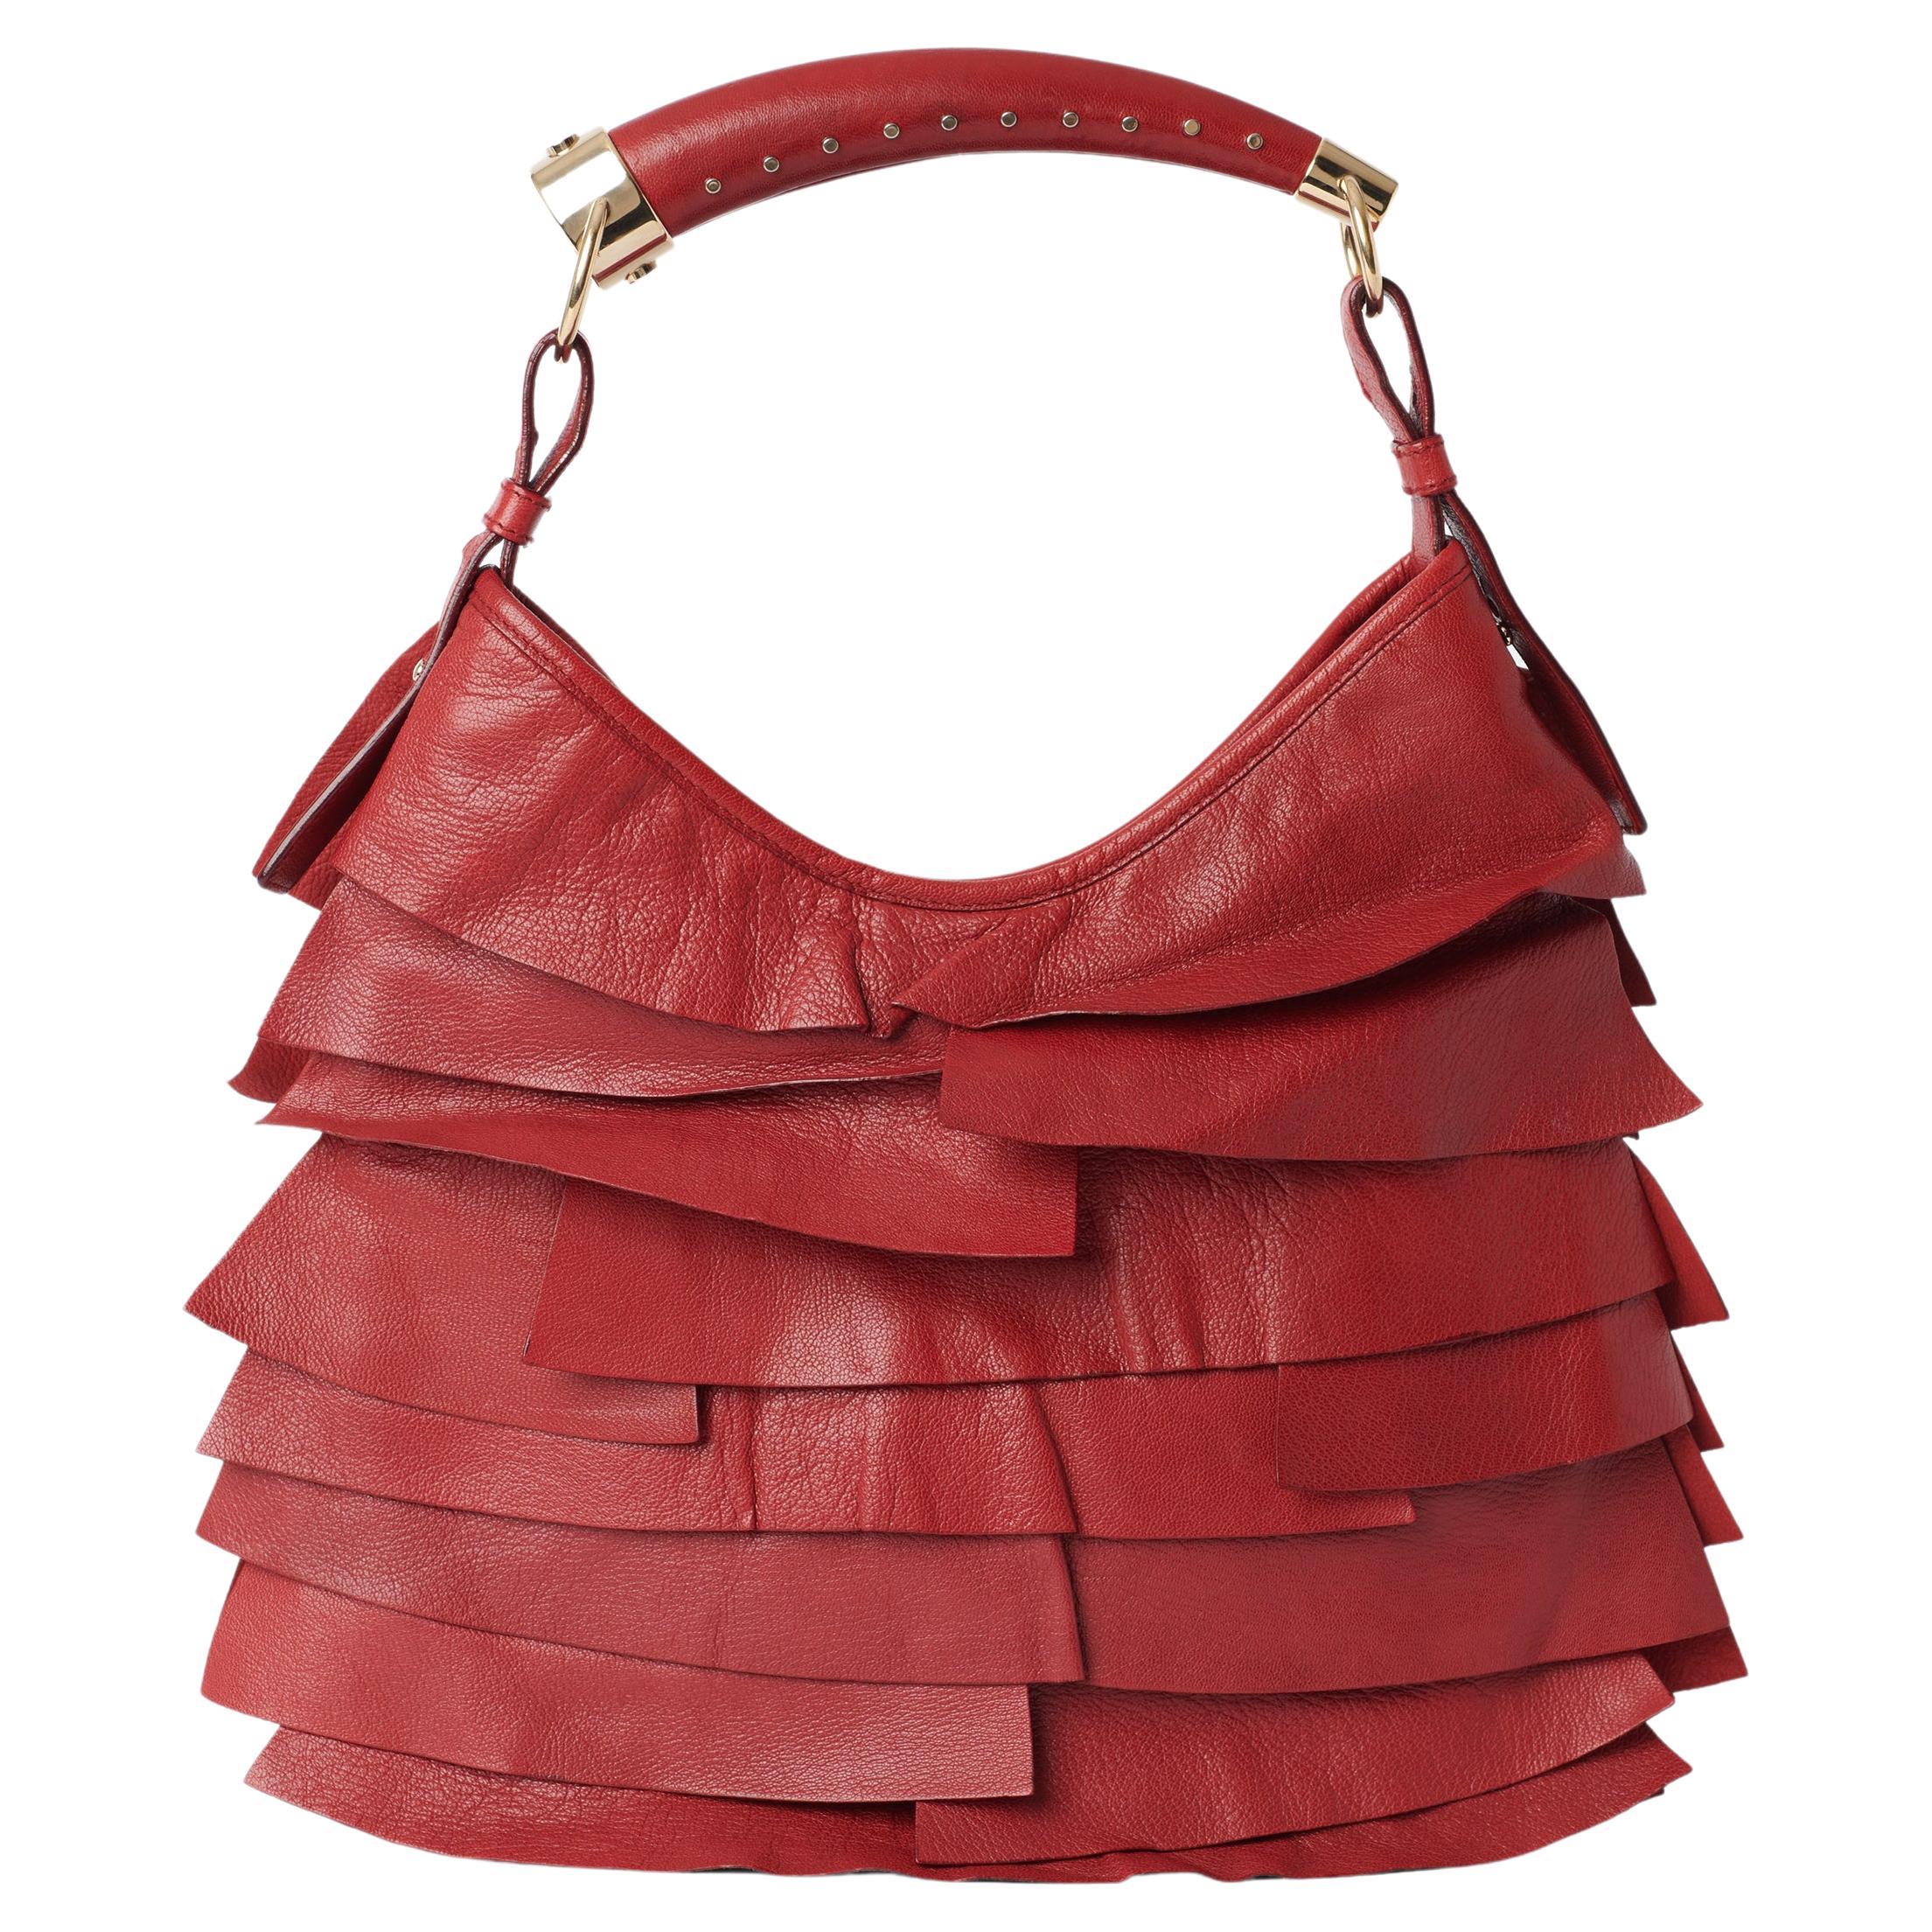 Vintage F/W 2004 Red St Tropez Ruffled Bag